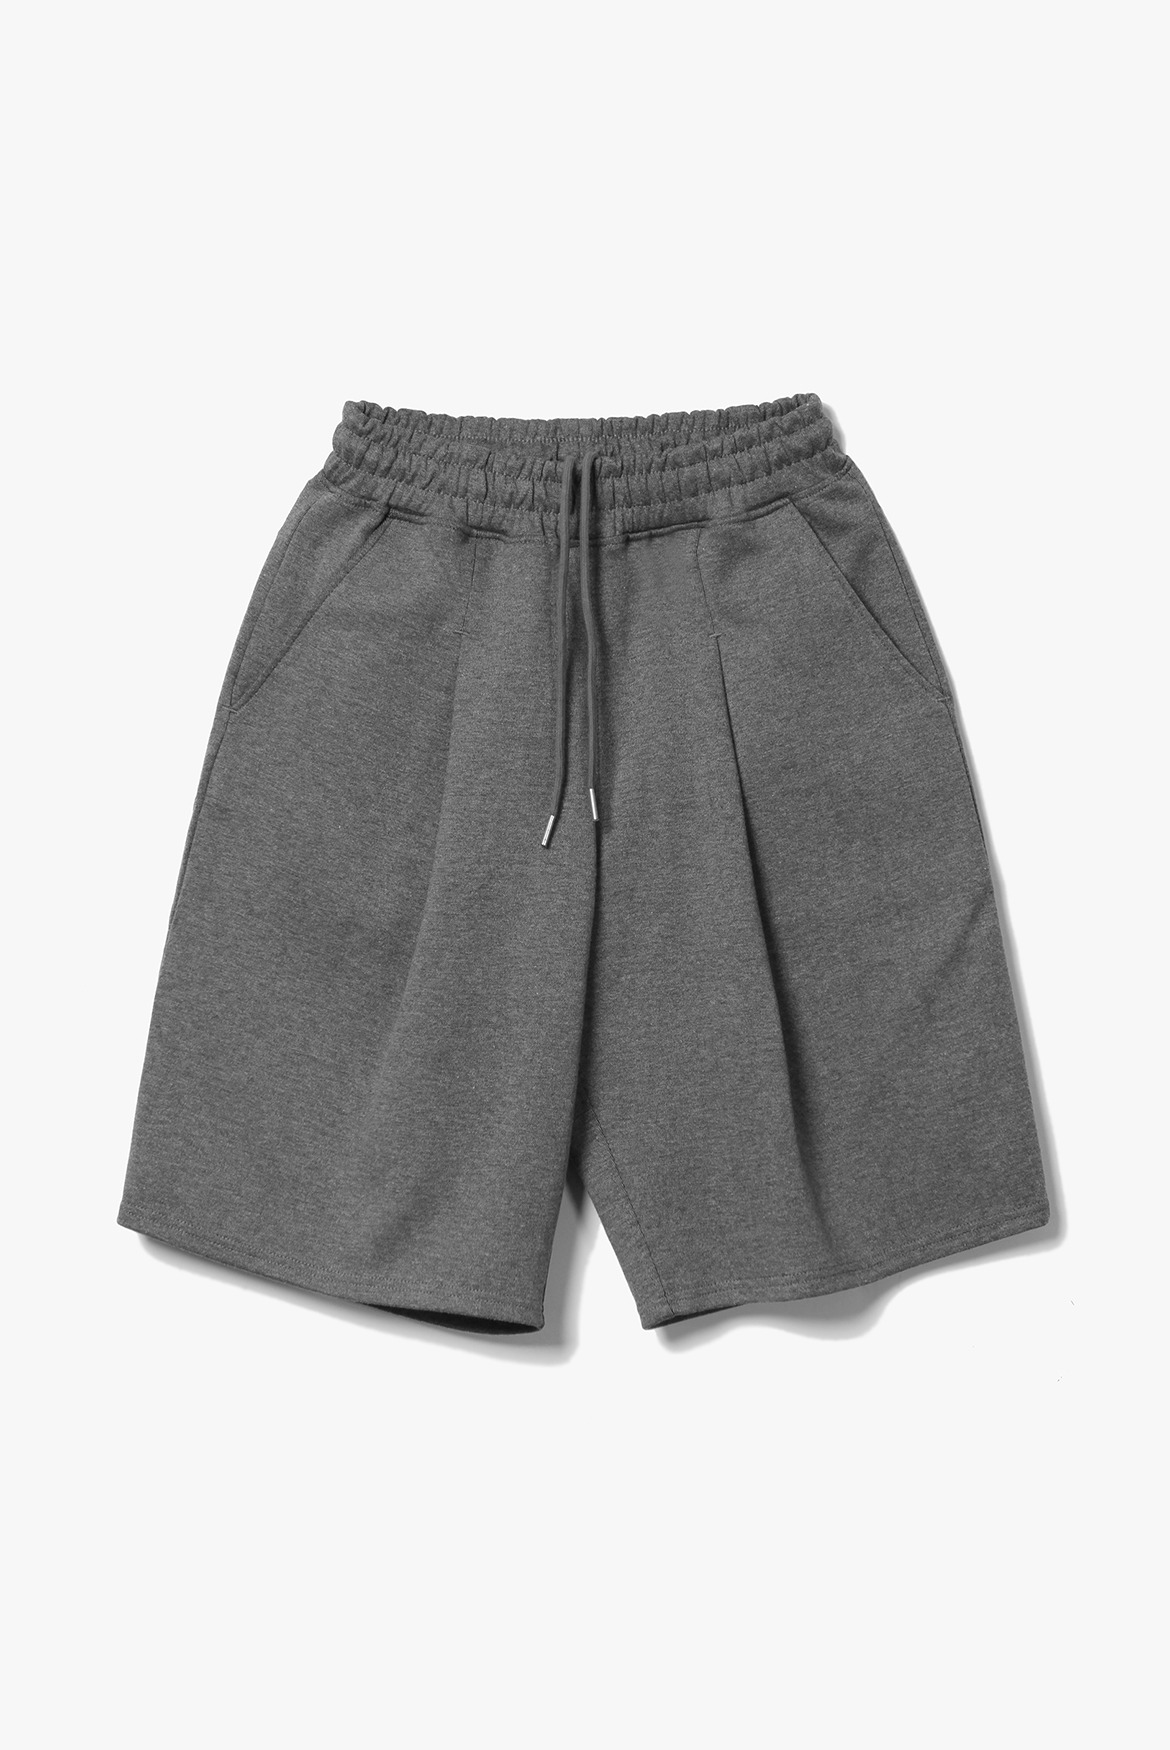 Deep One Tuck Sweat Shorts [Charcoal]